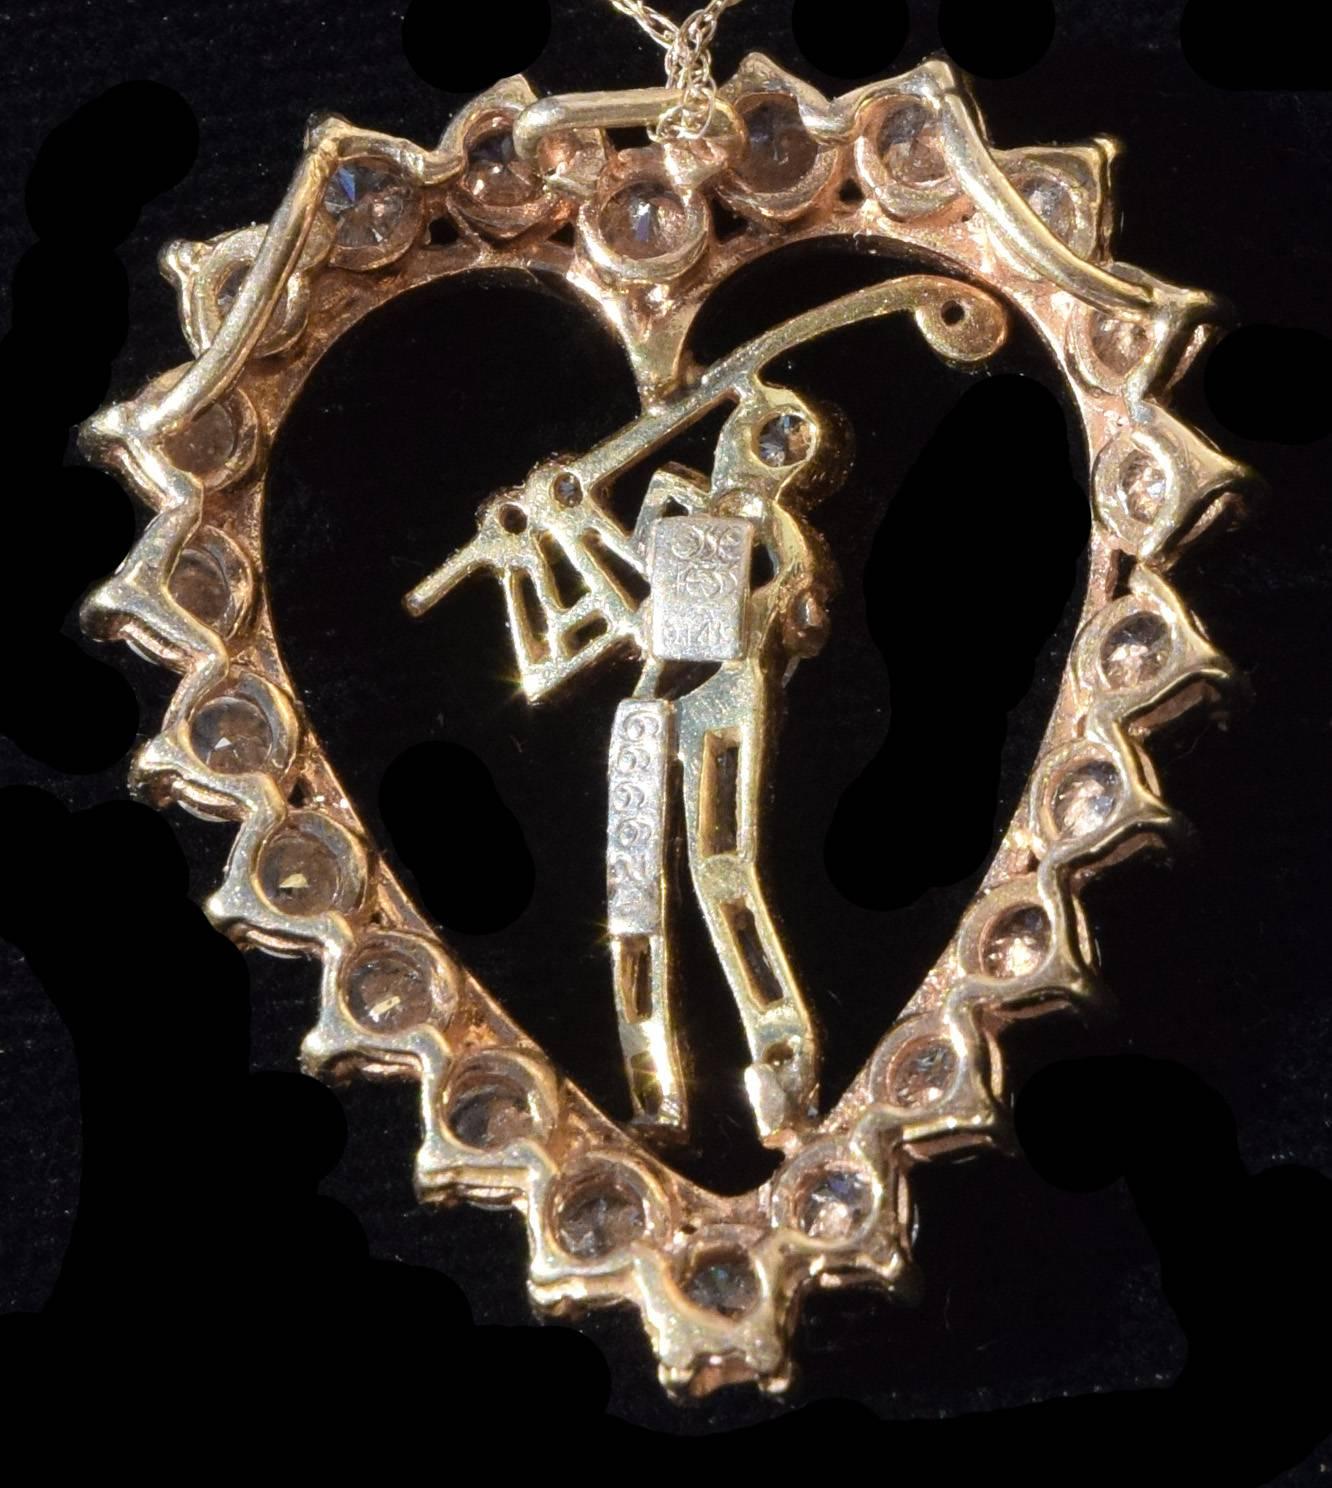 Modern Jose Hess Vintage Diamond Heart Pendant Gofler G-H Color, VS2, 2.09 Total Carats